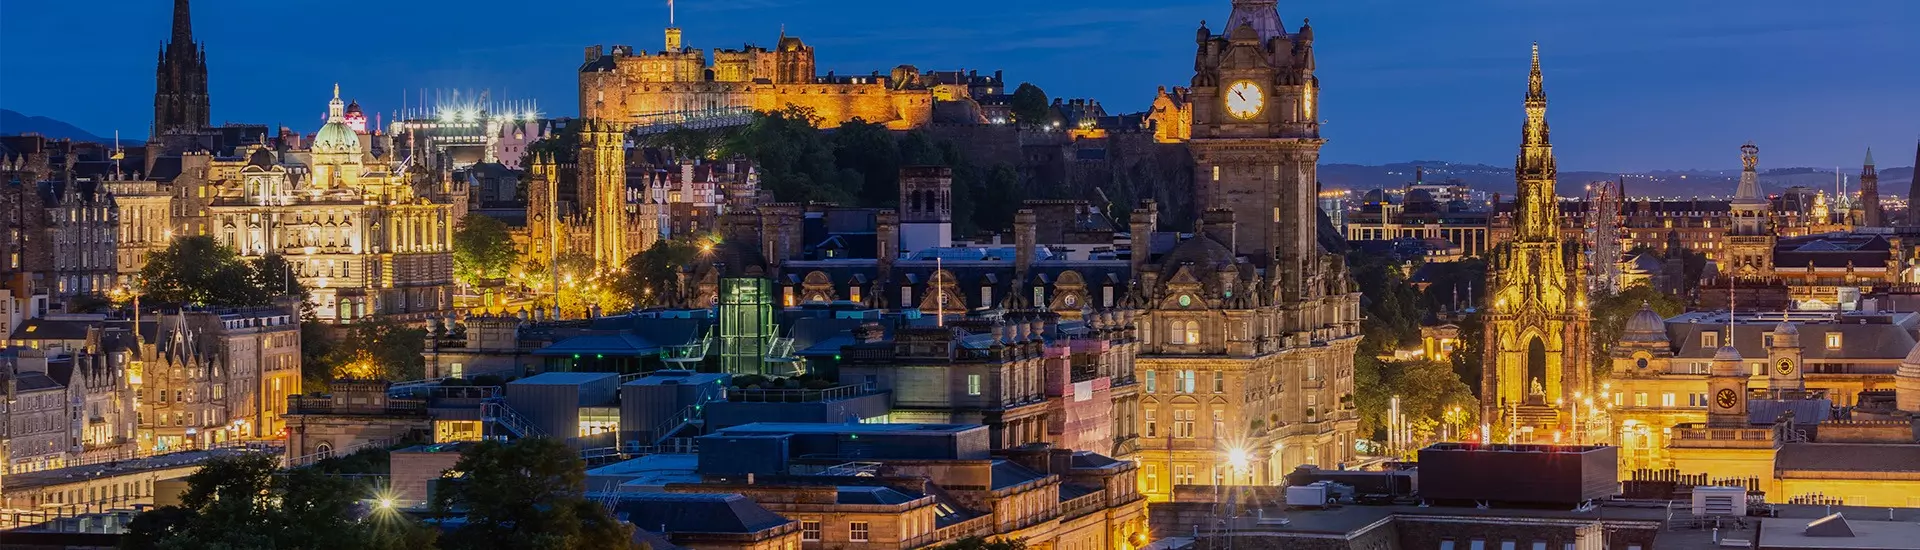 Top Free attractions in Edinburgh - Guest House in Edinburgh